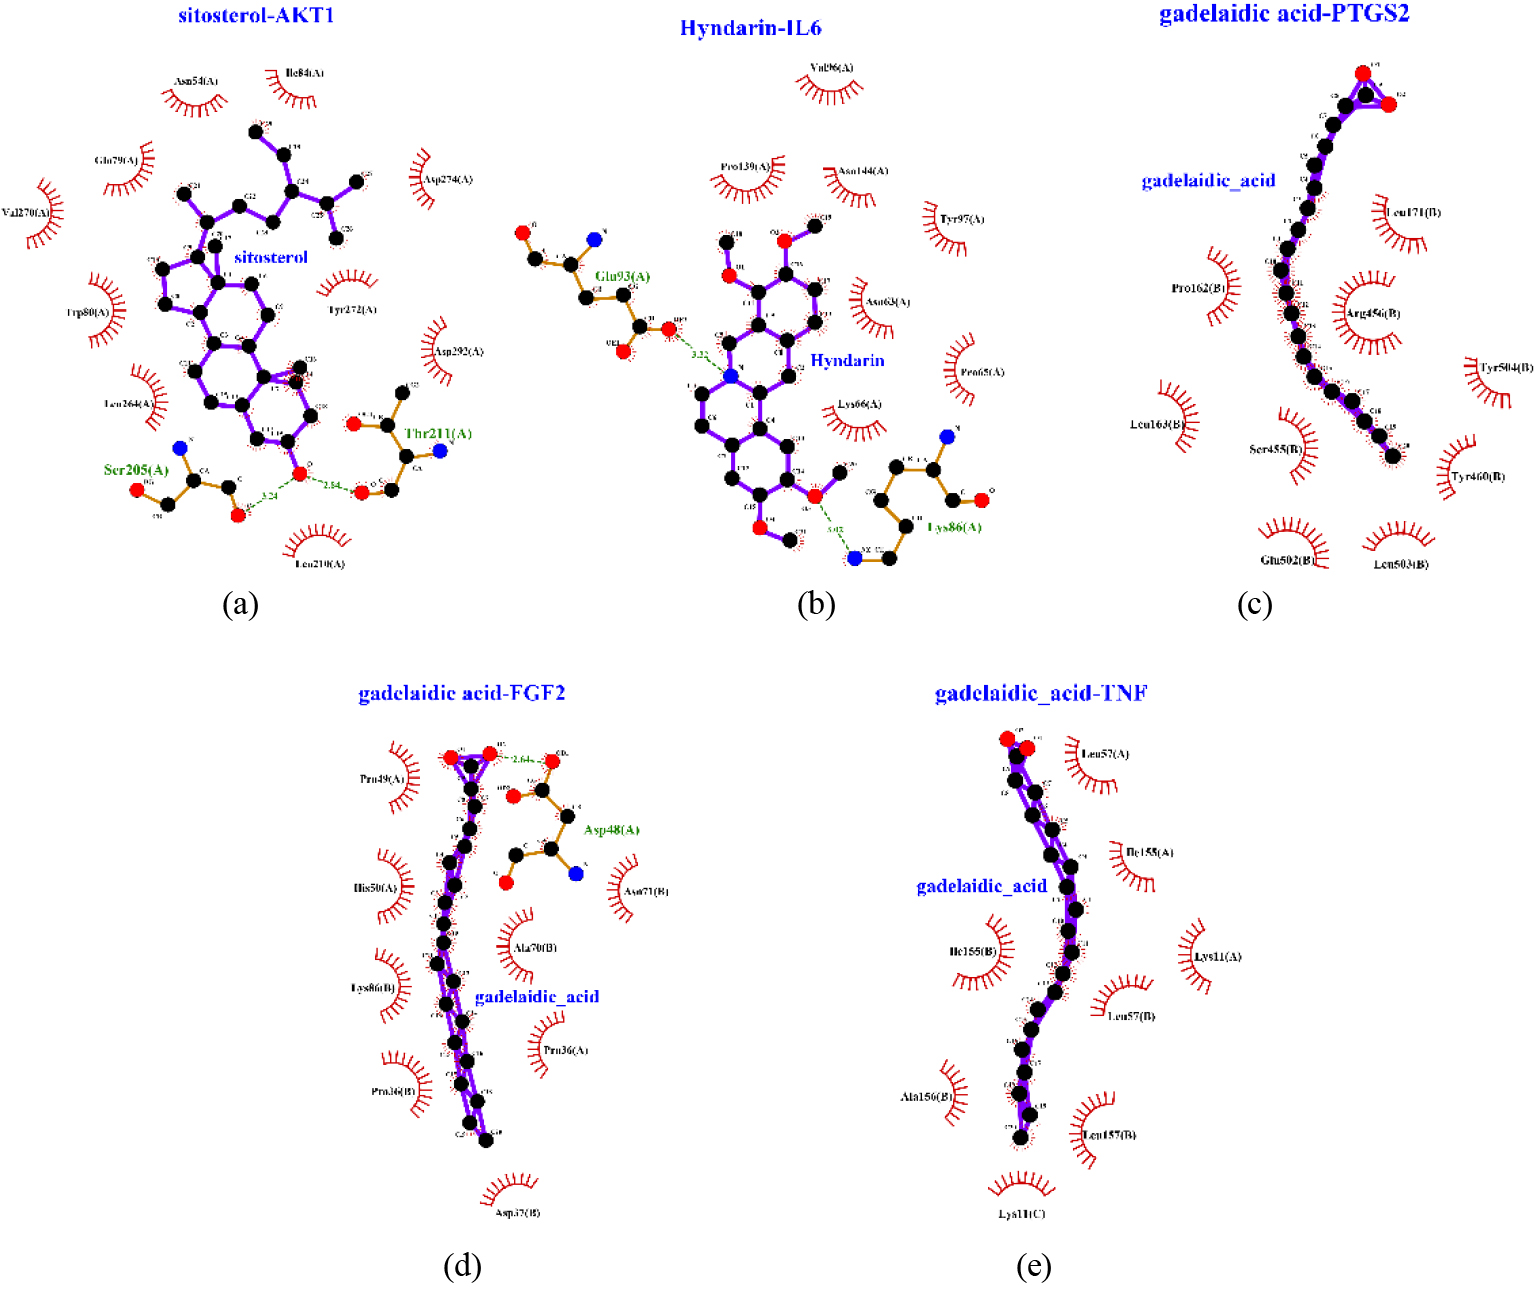 Molecular docking 2D-structure diagrams. (a) sitosterol-AKT1, (b) Hyndarin-IL6, (c) gadelaidic-FGF2, (d) gadelaidic-PTGS2, (e) gadelaidic-TNF.